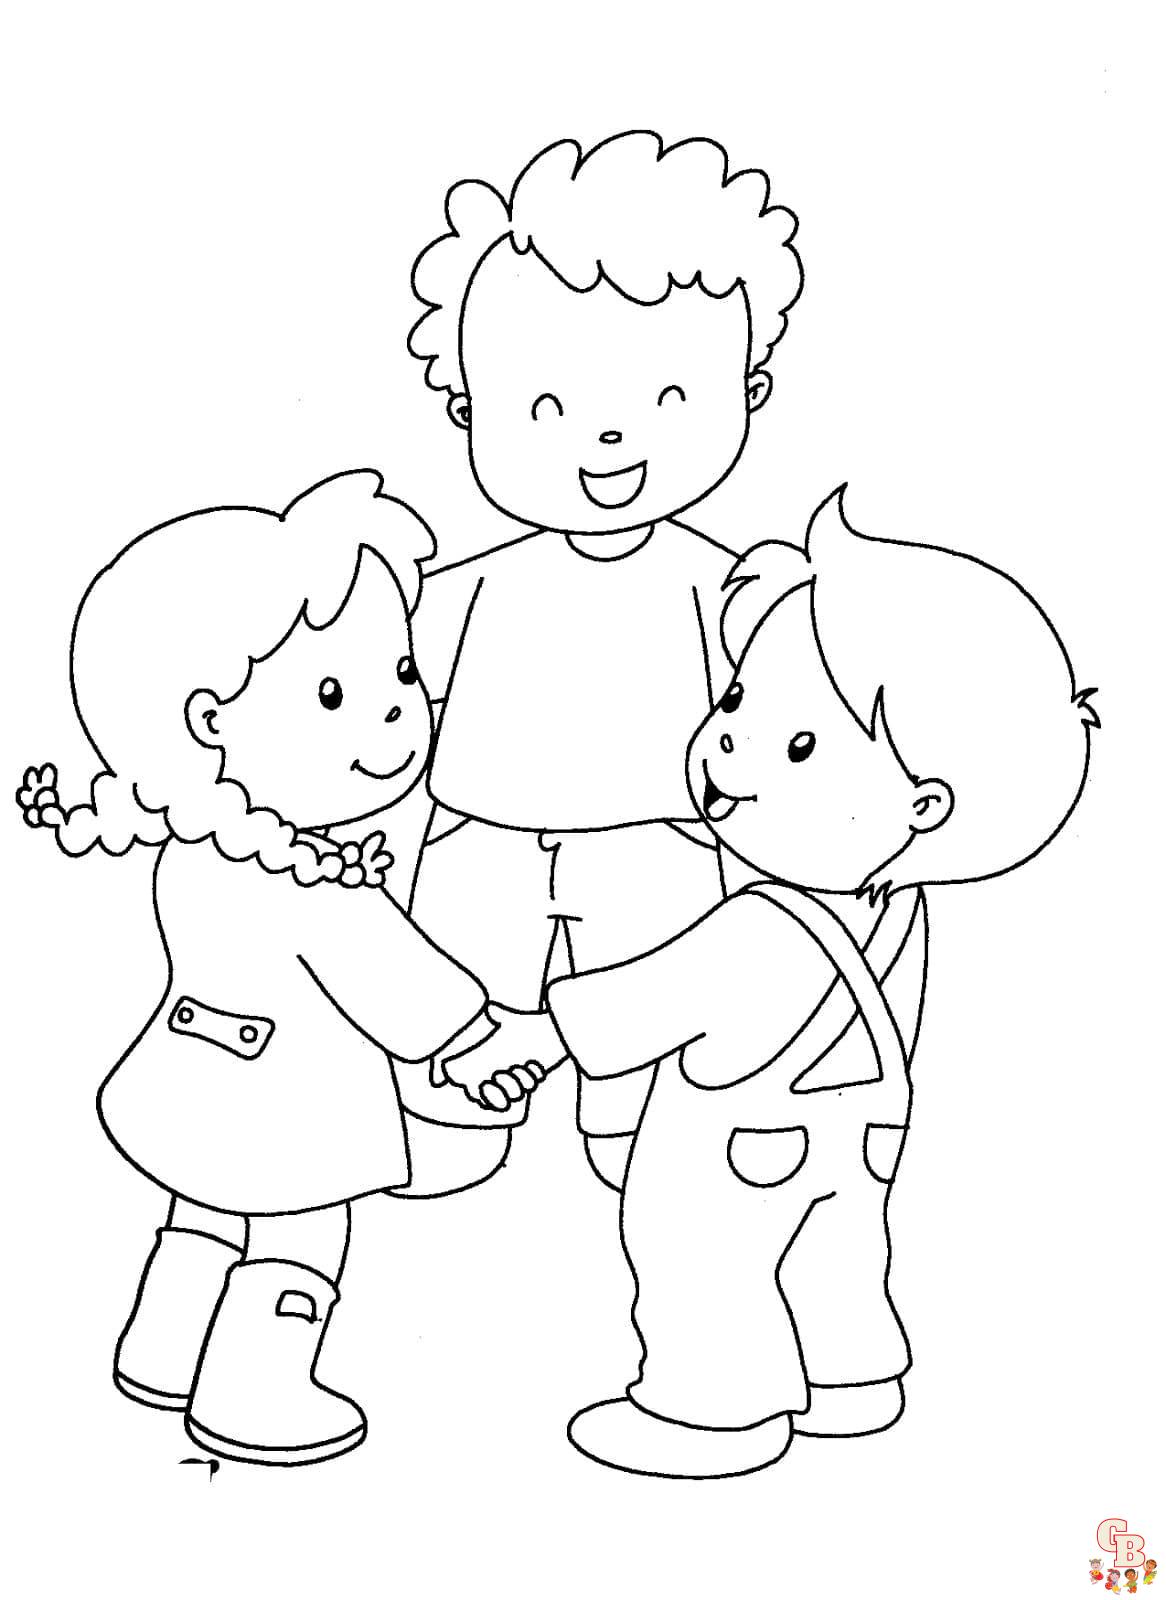 Coloring page Little friends